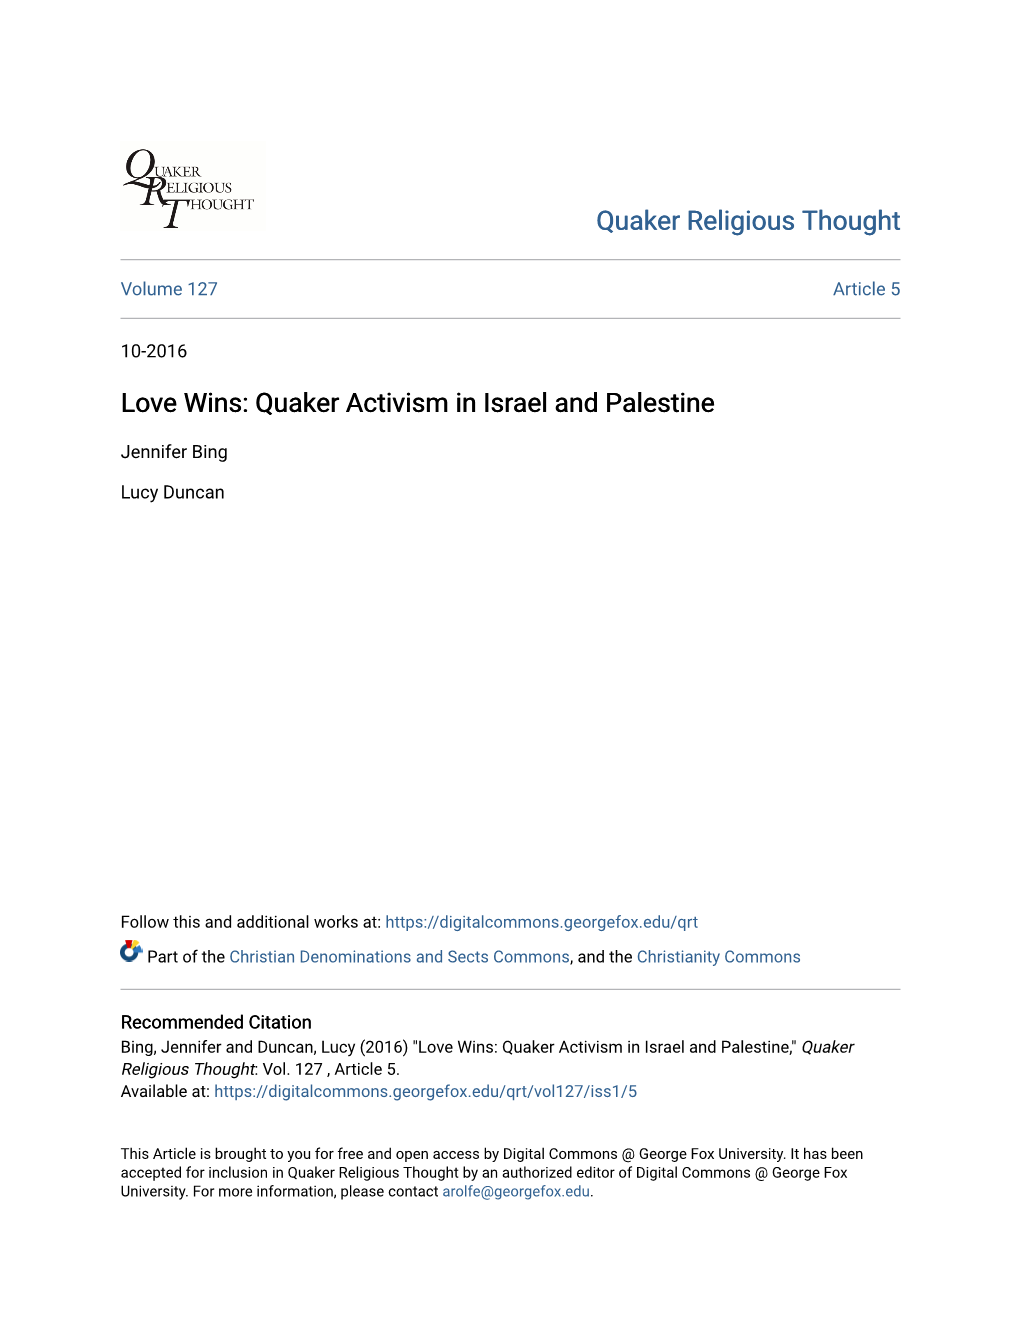 Quaker Activism in Israel and Palestine